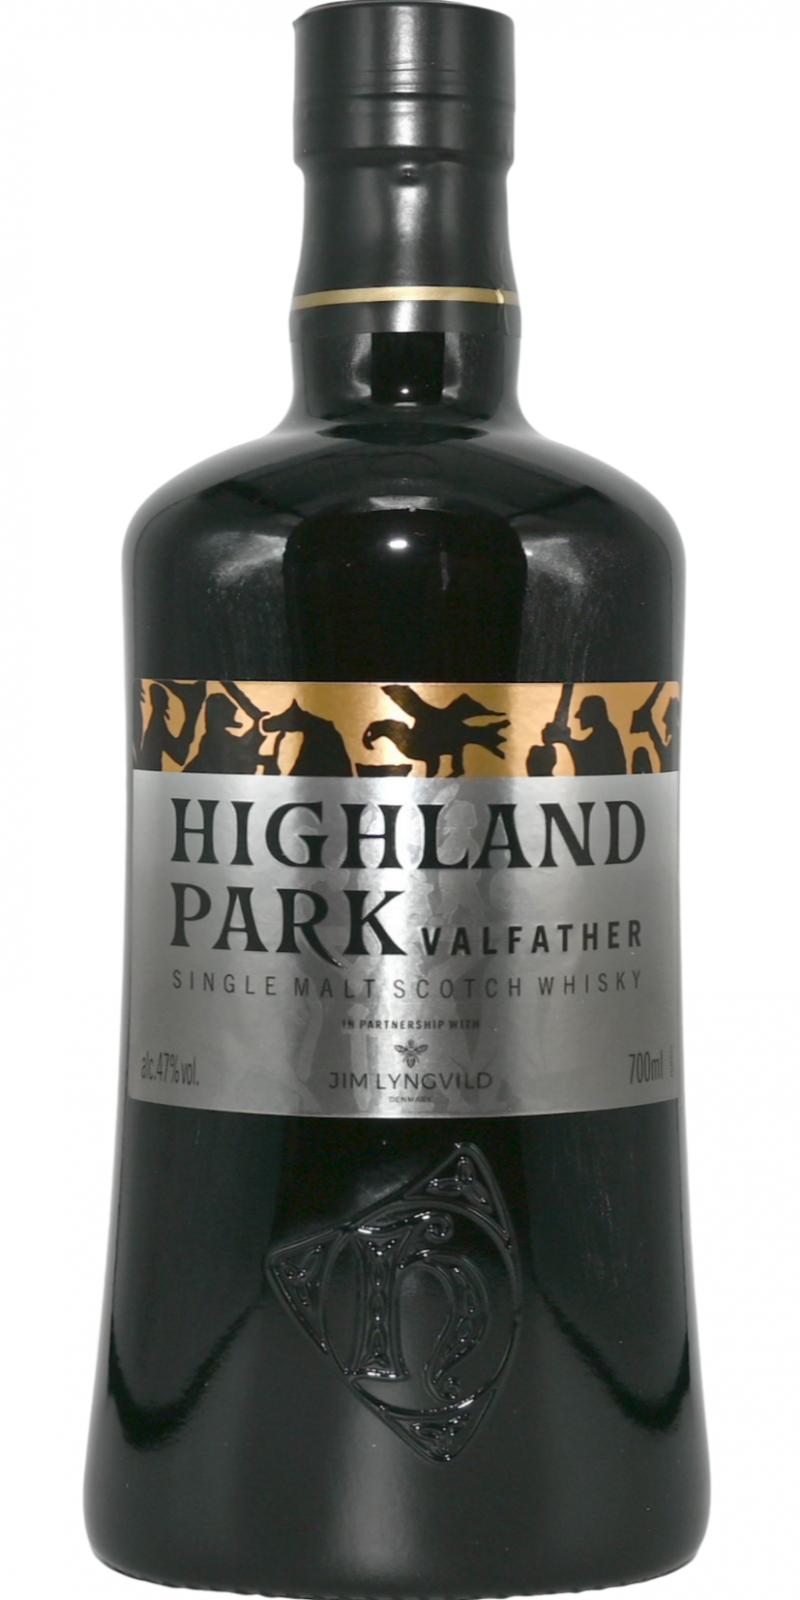 Highland Park Valfather 47% 700ml